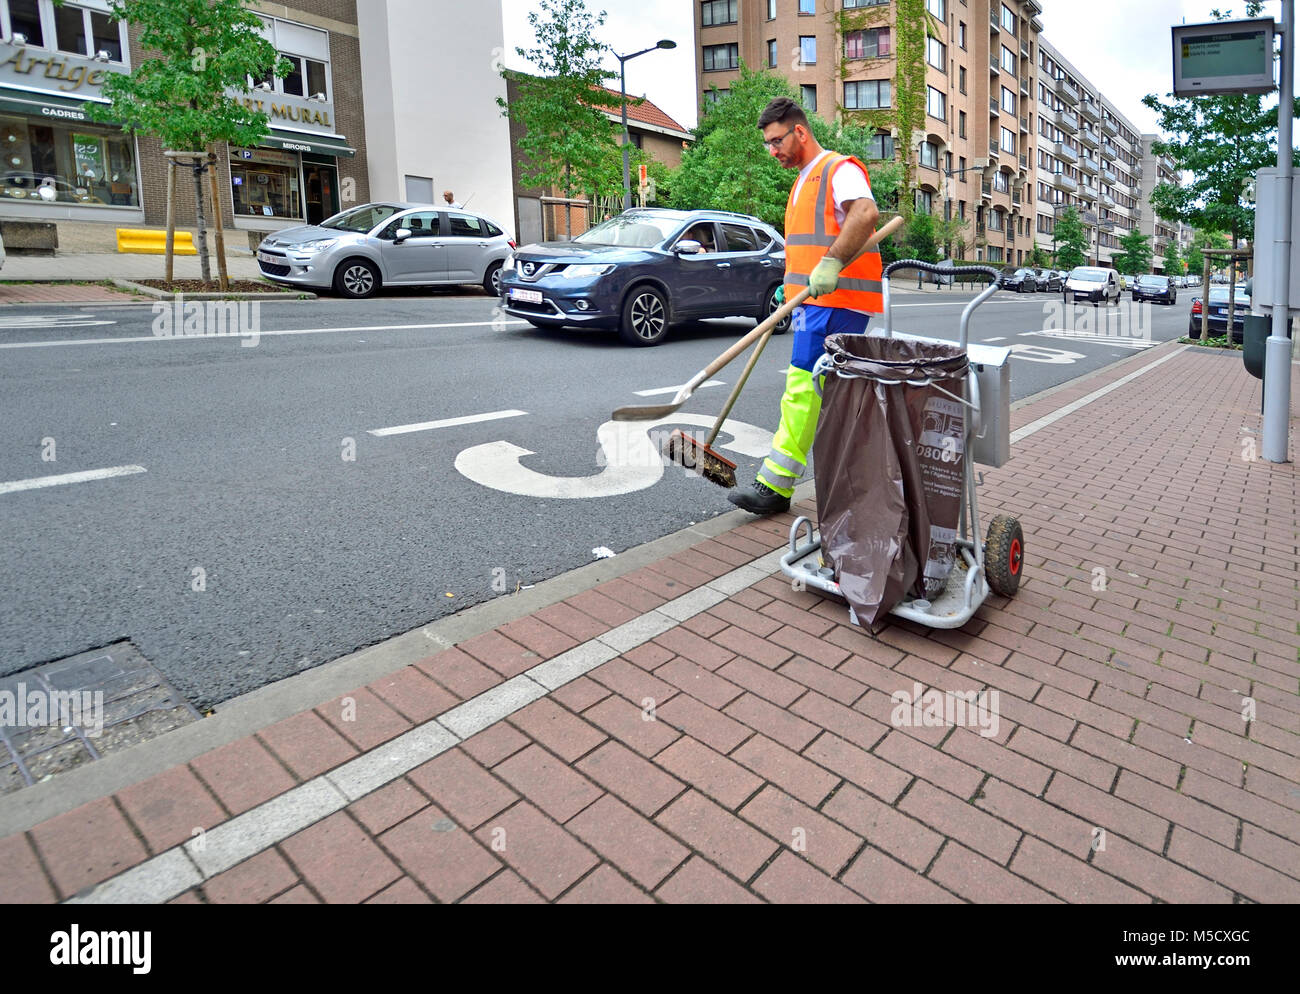 Brüssel, Belgien. Street cleaner in einer hohen vis Weste Stockfoto